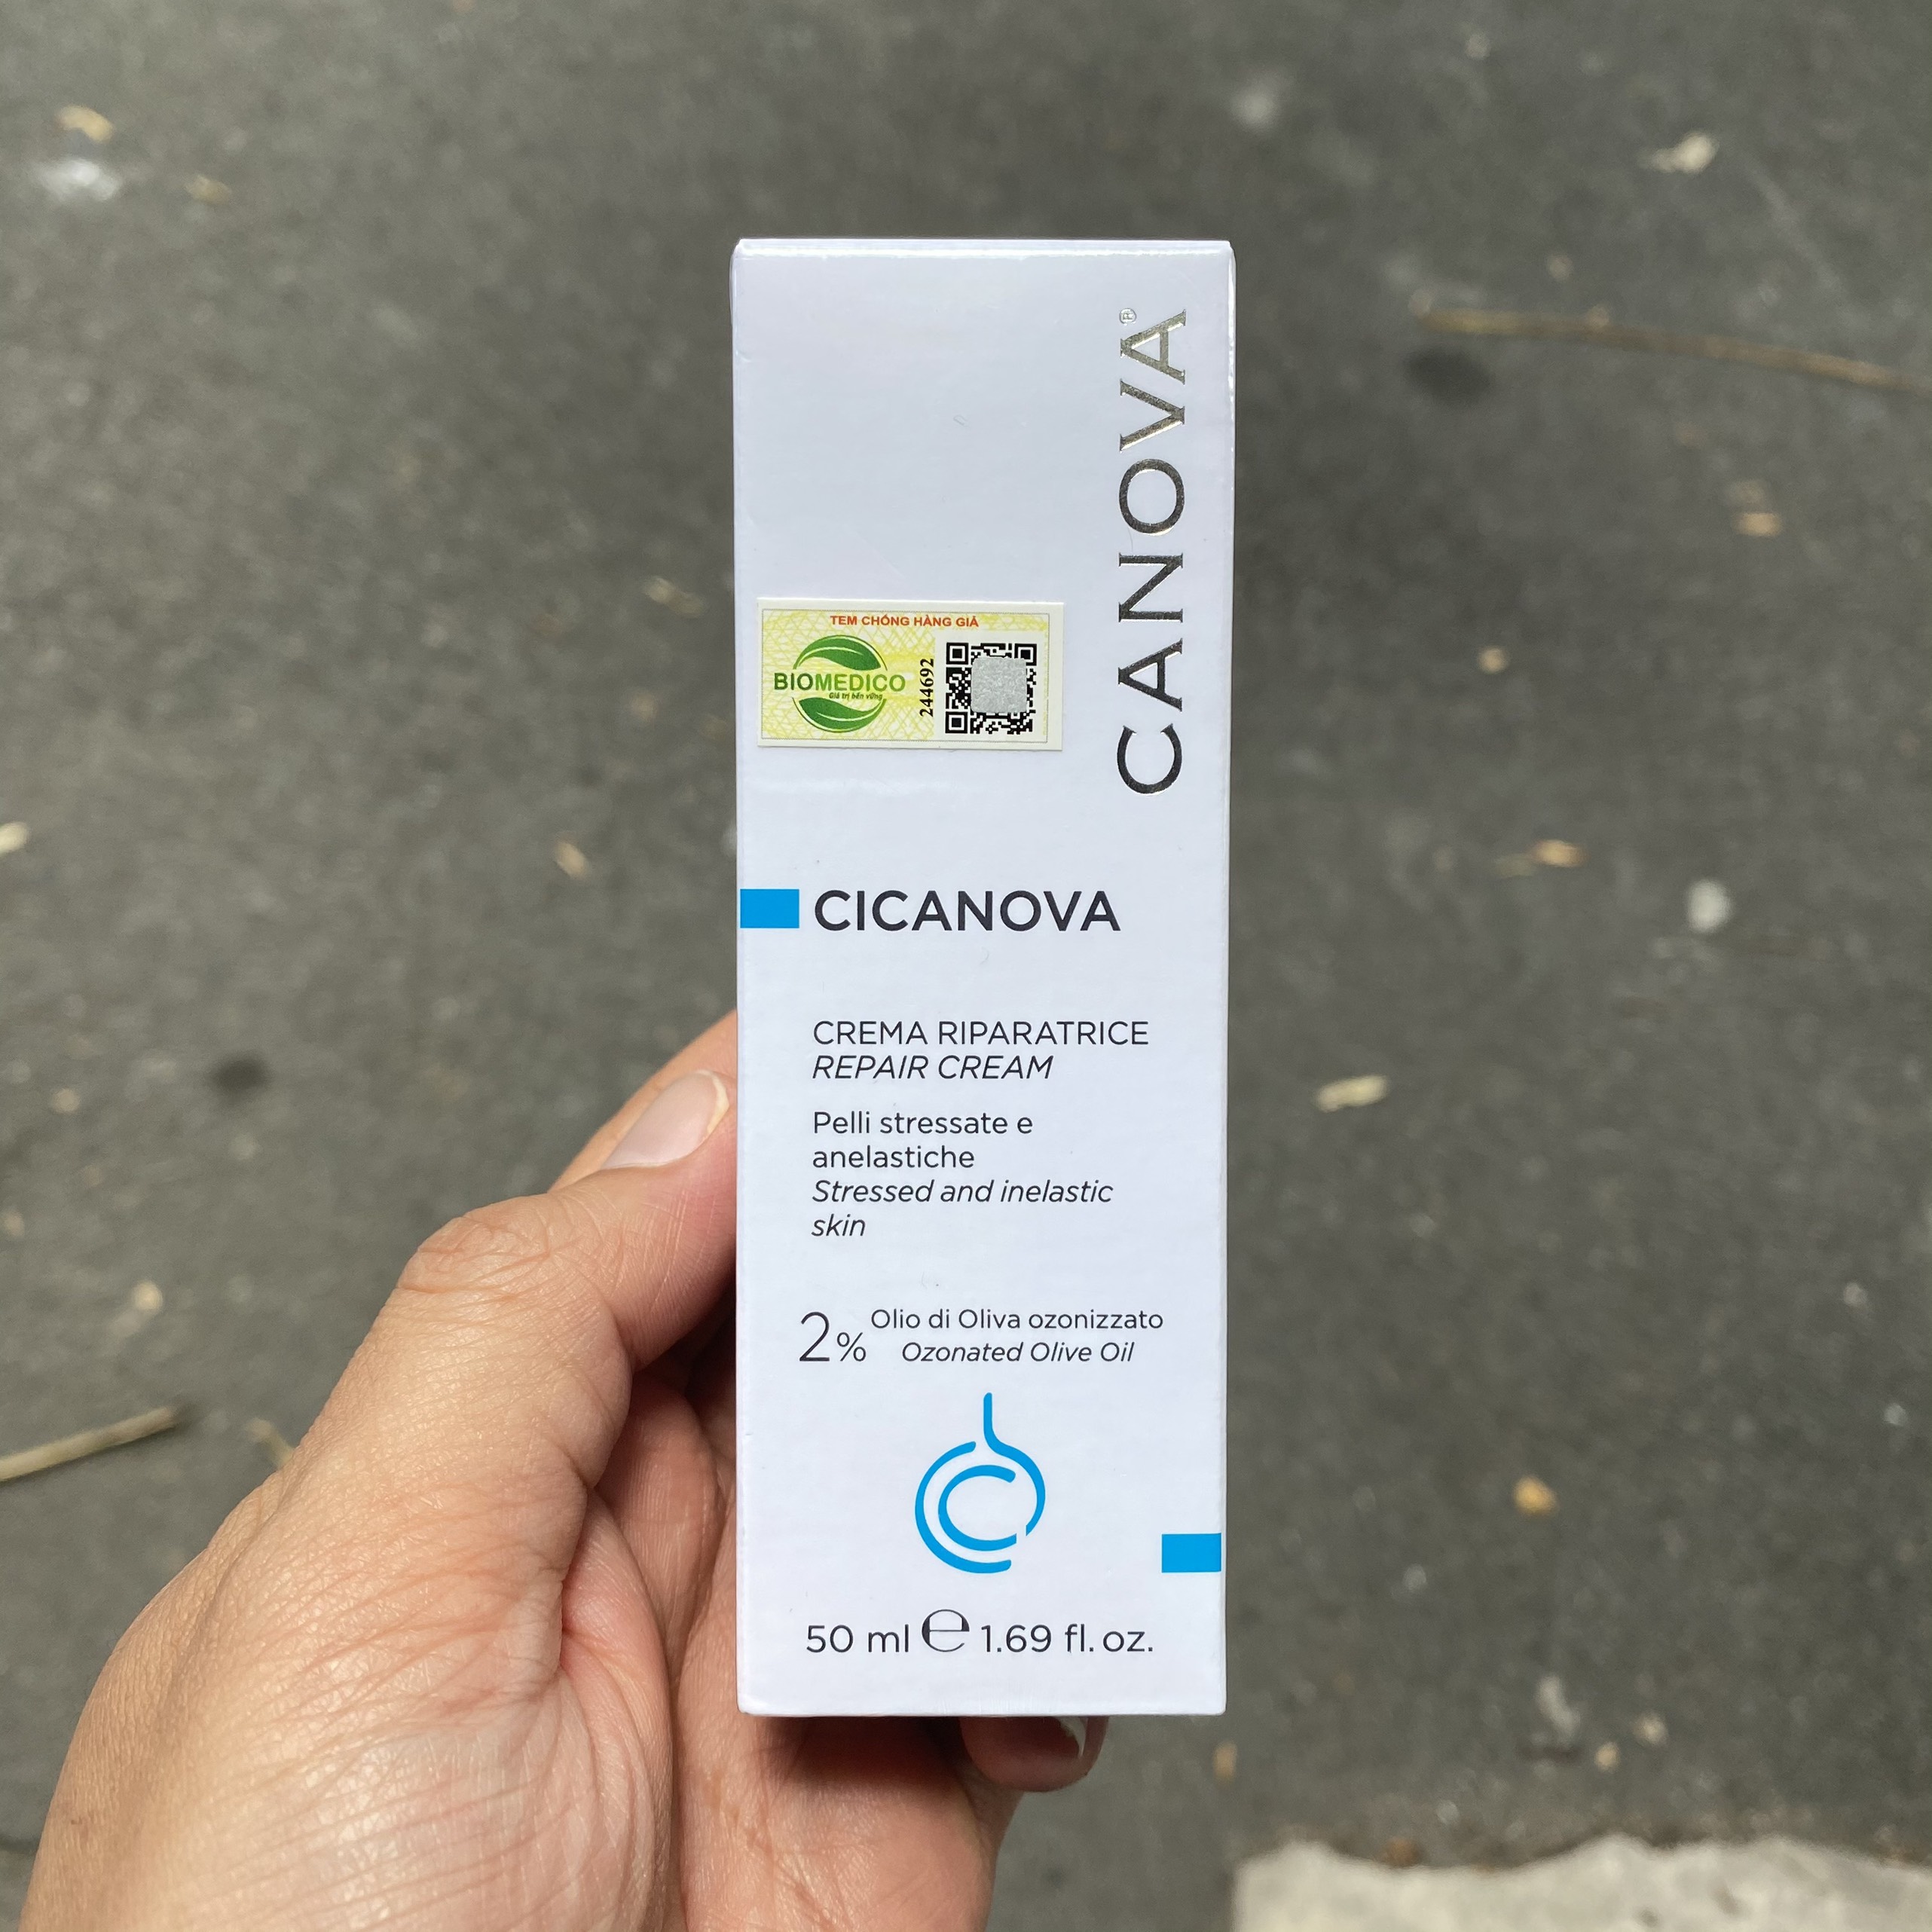 Kem ngăn ngừa sẹo CANOVA Cicanova Crema Riparatrice Repair Cream 50ml - Ban đêm, sẹo mụn, sau laser, peel, lăn kim